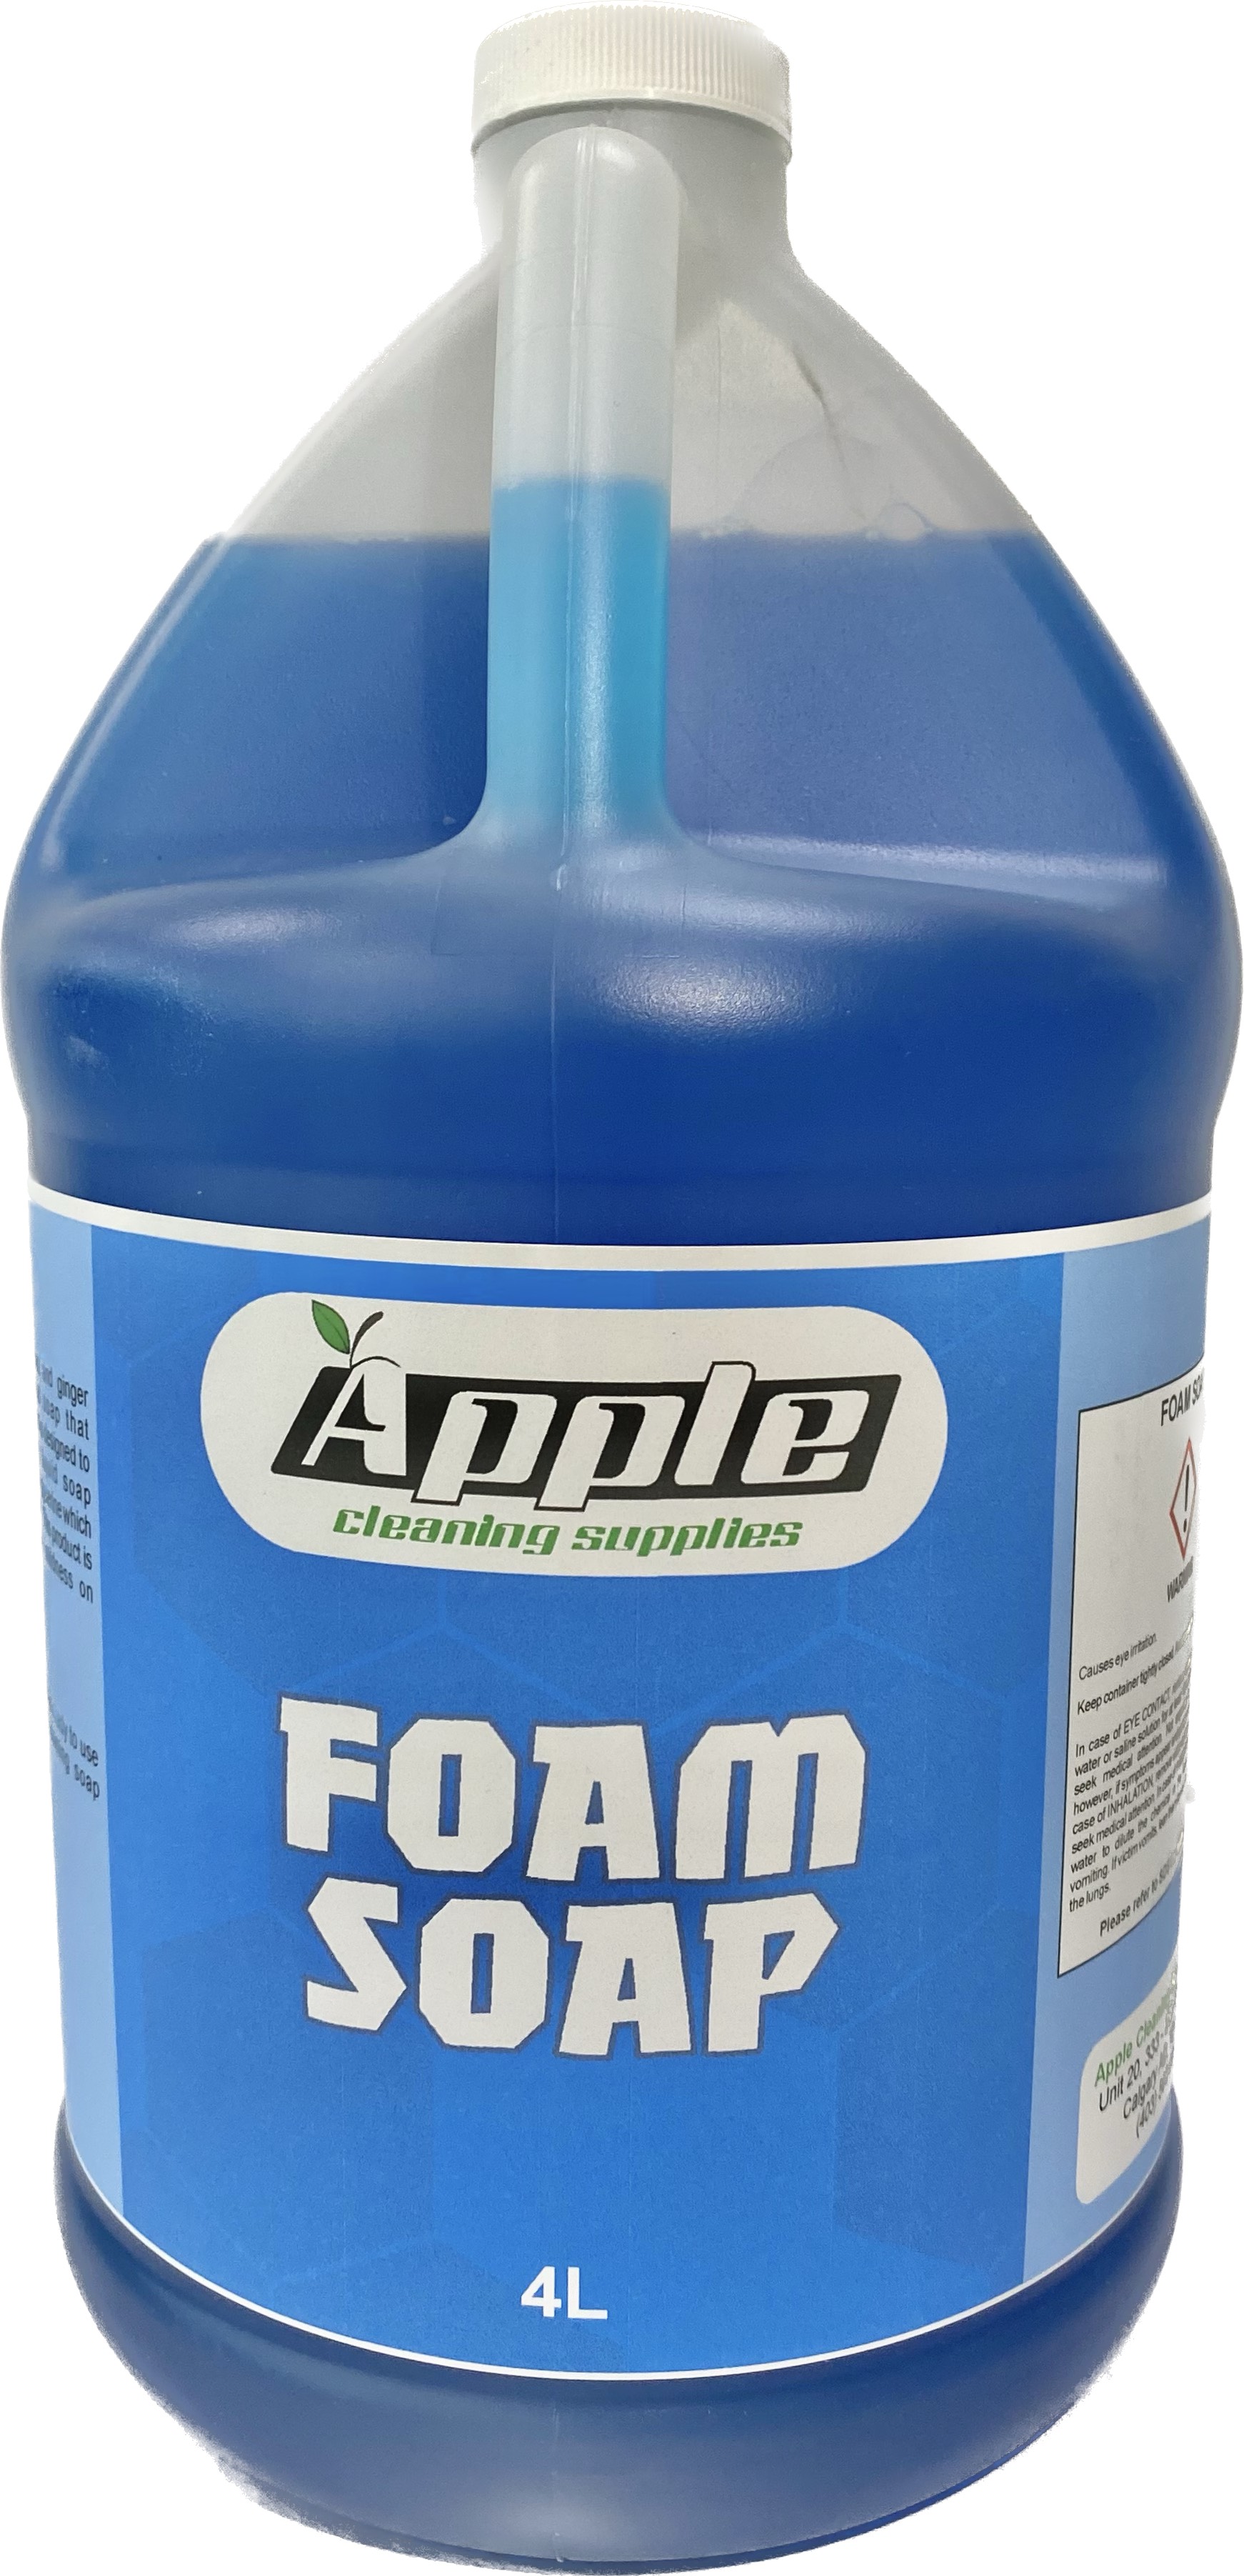 Apple Brand 4L Foam Soap Scented